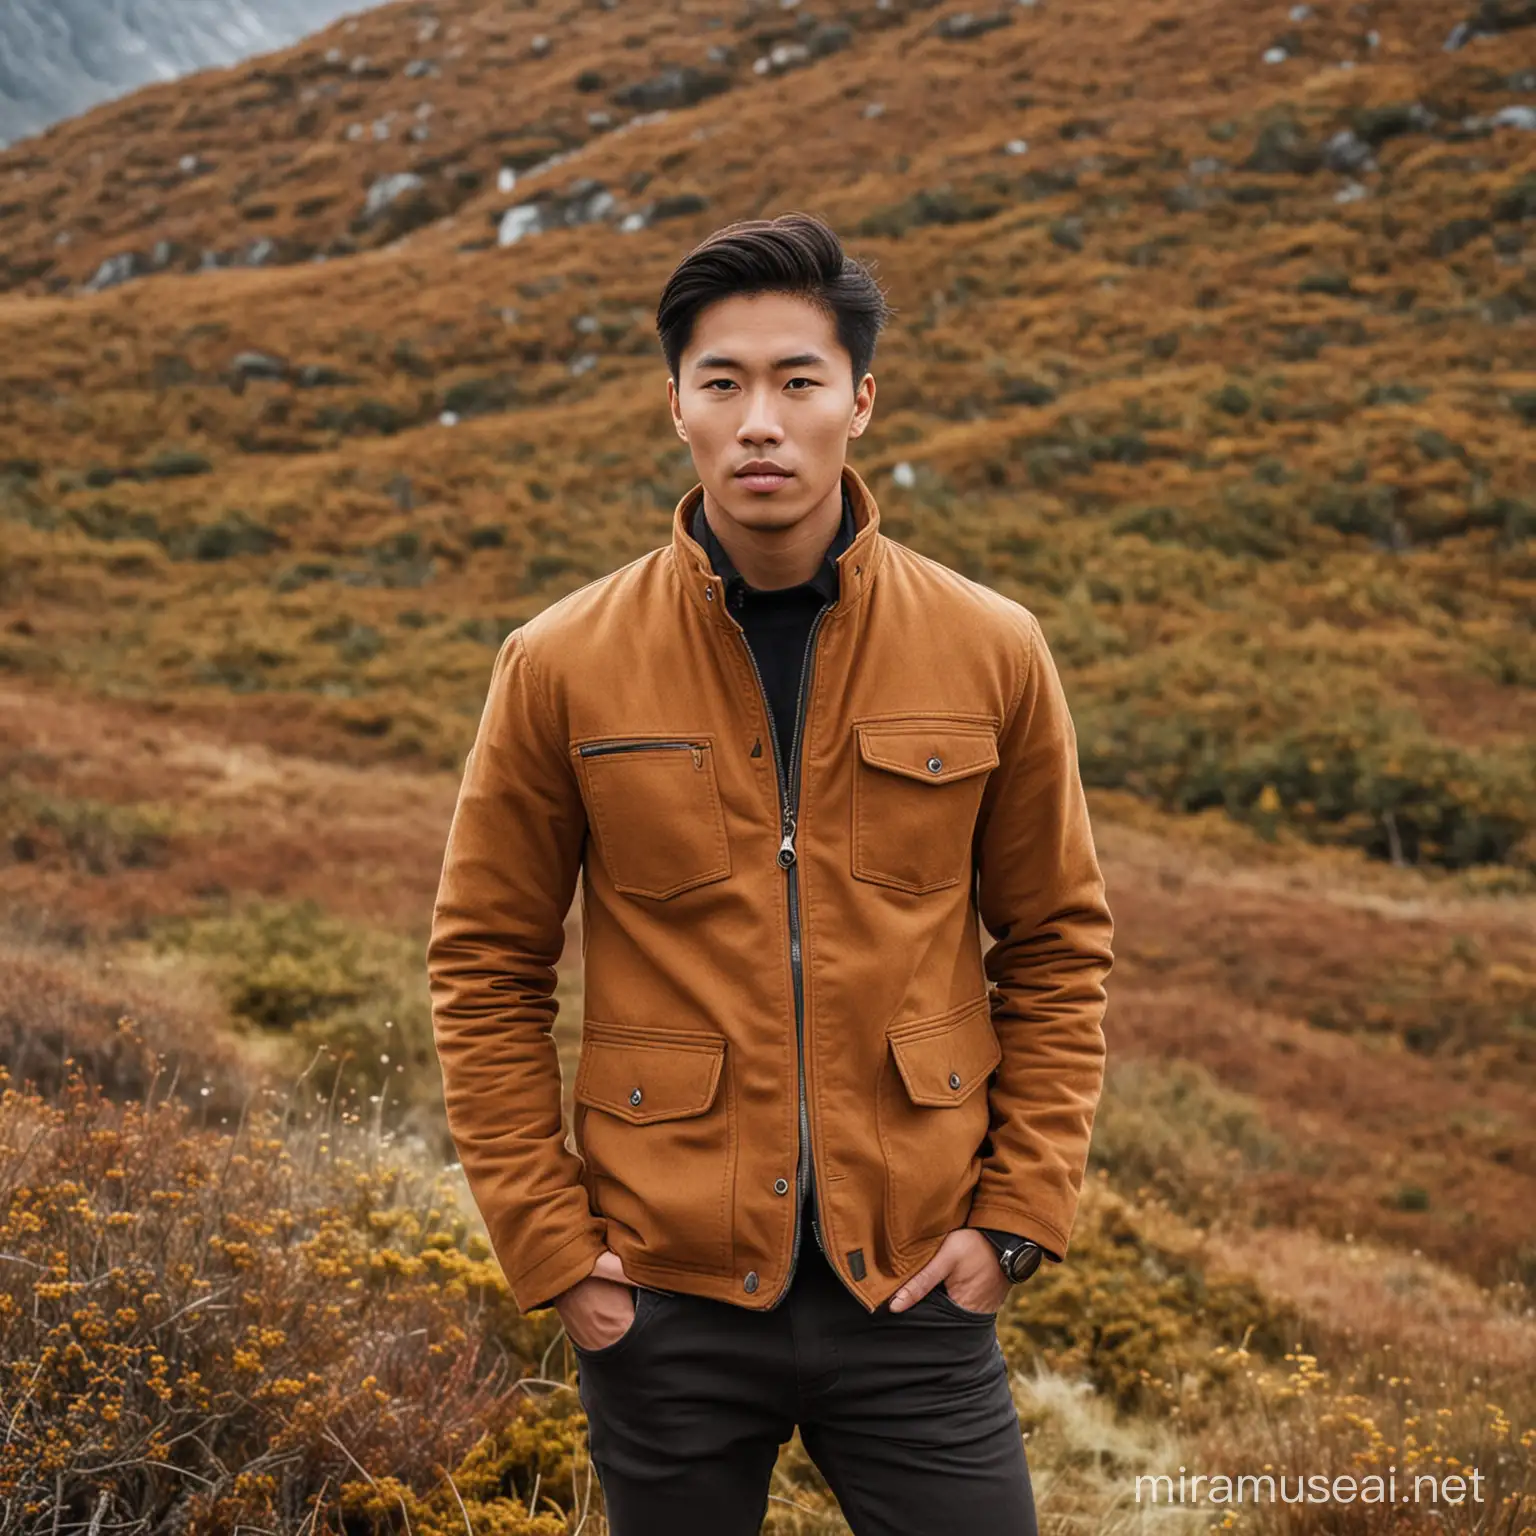 Asian Man in Brown Jacket Amidst Norwegian Wilderness